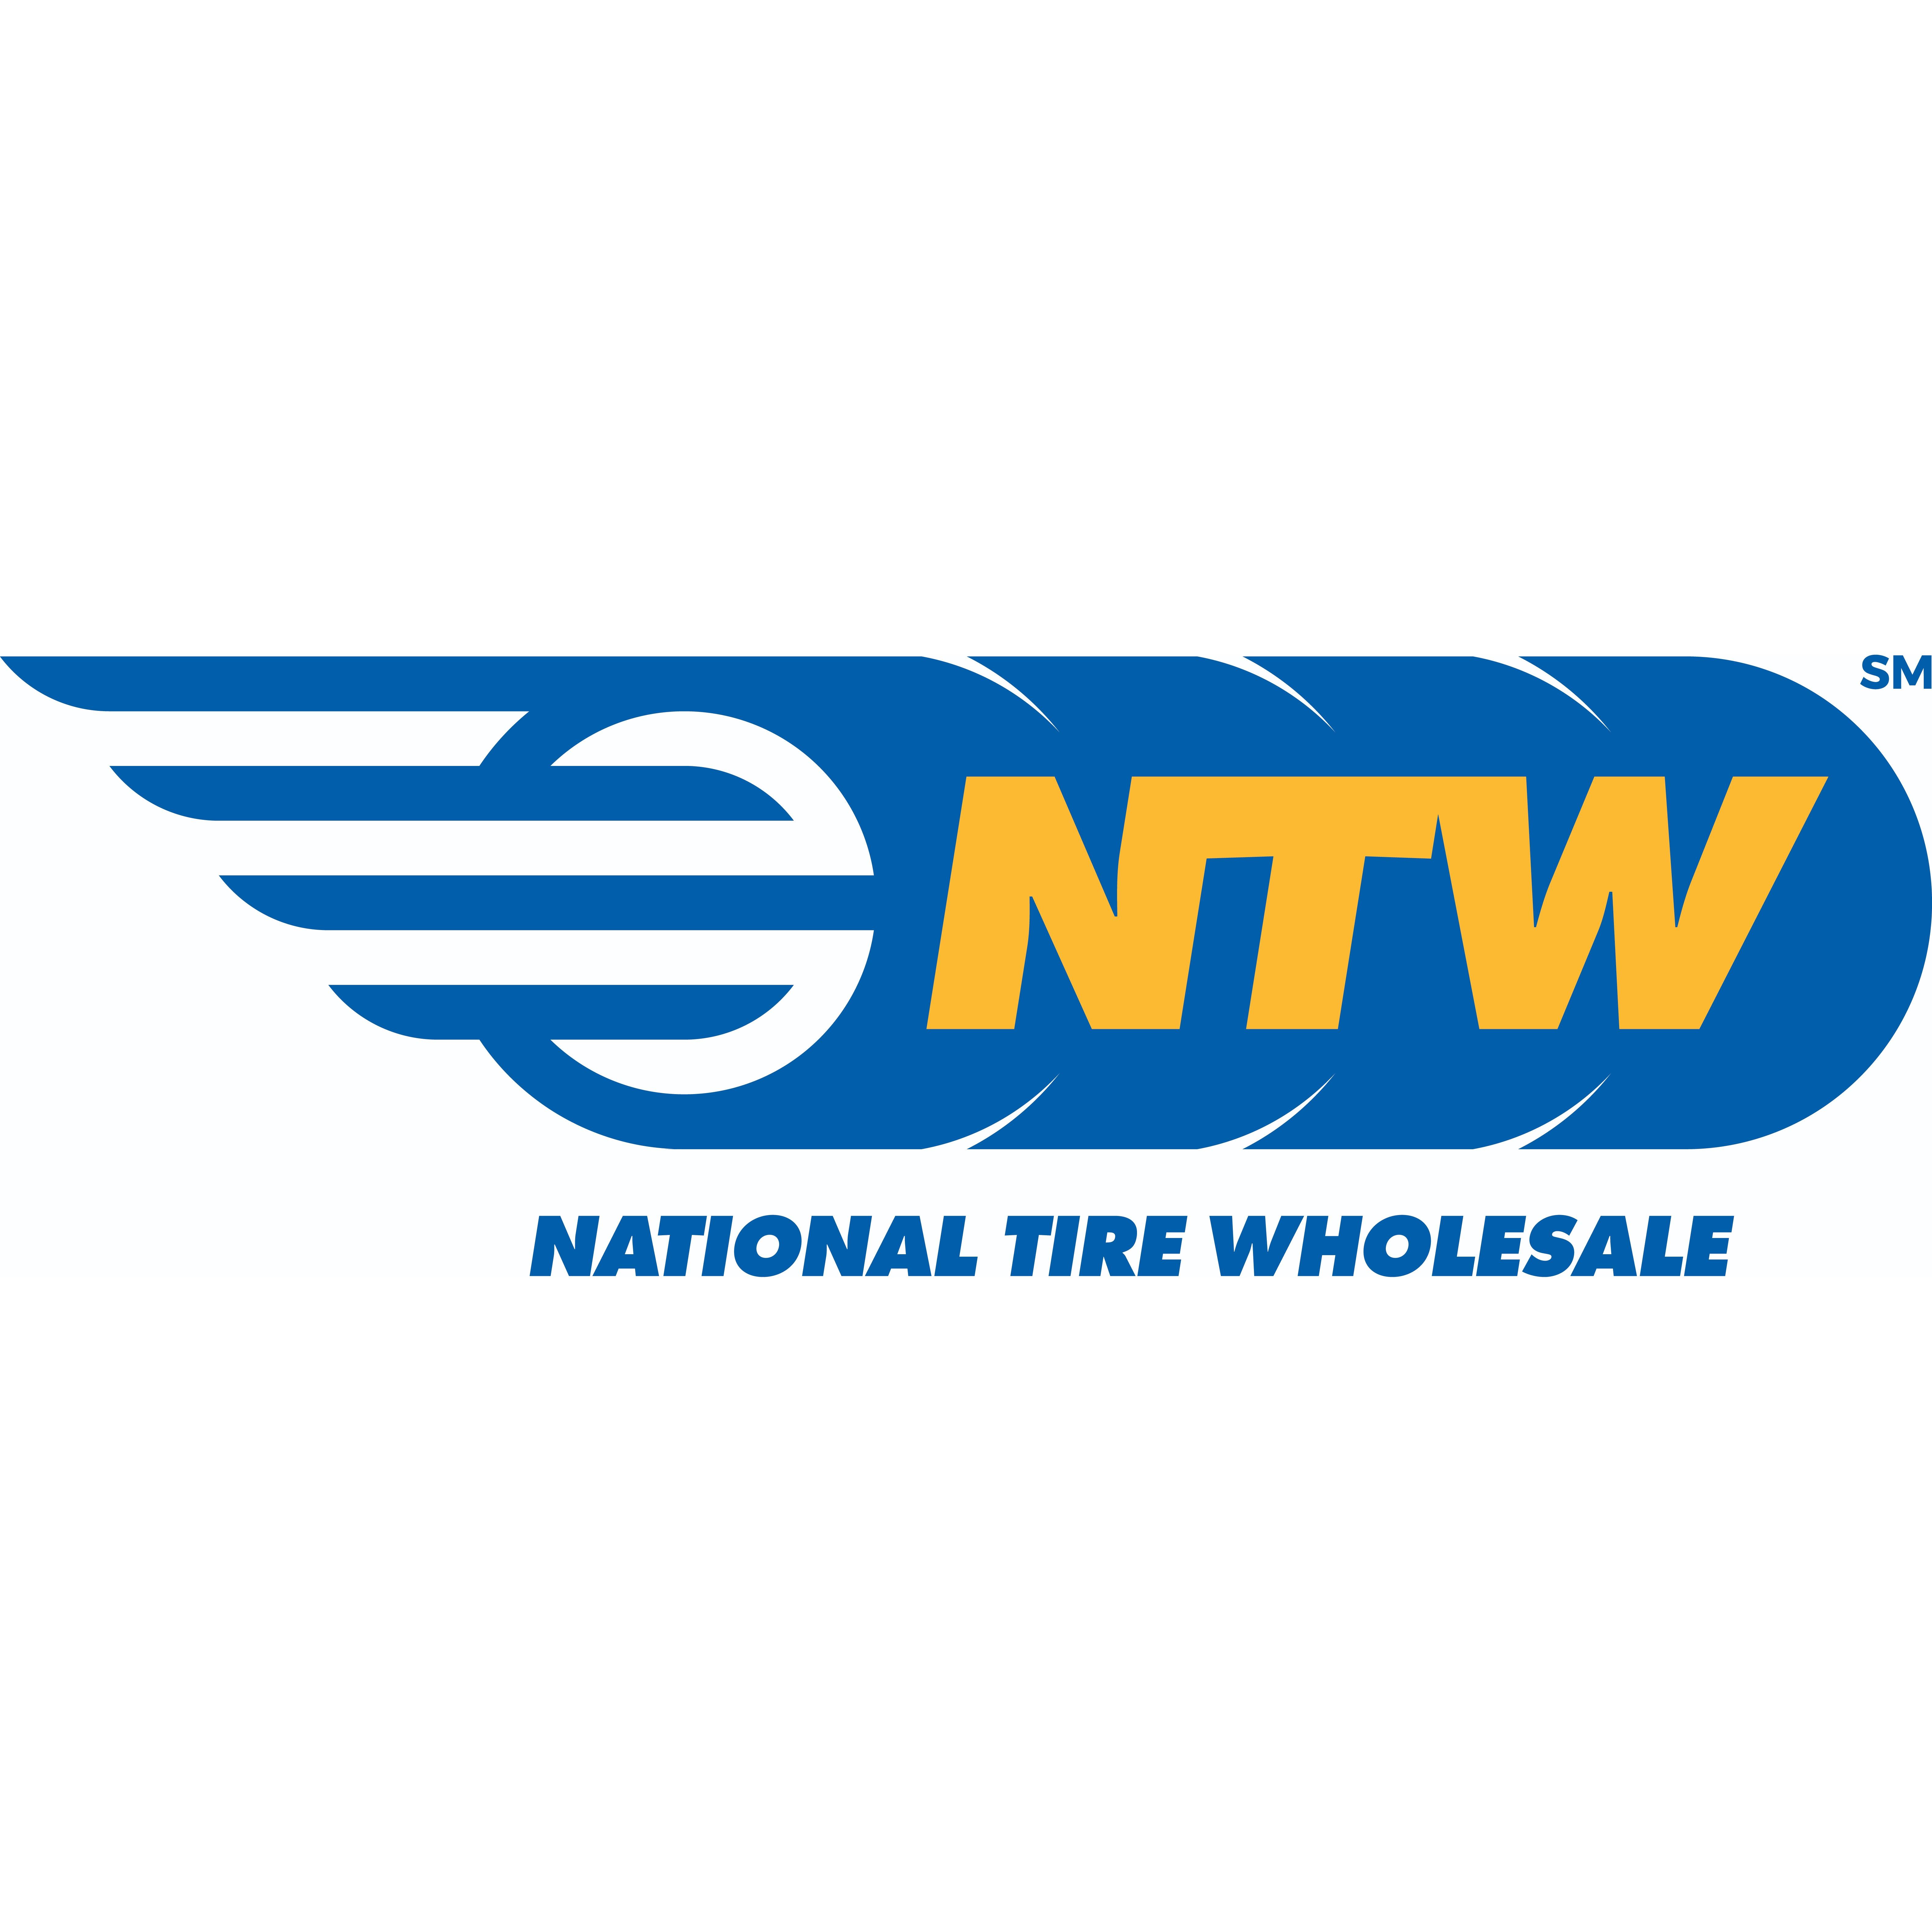 NTW - National Tire Wholesale - Kansas City, KS 66105 - (913)321-2233 | ShowMeLocal.com